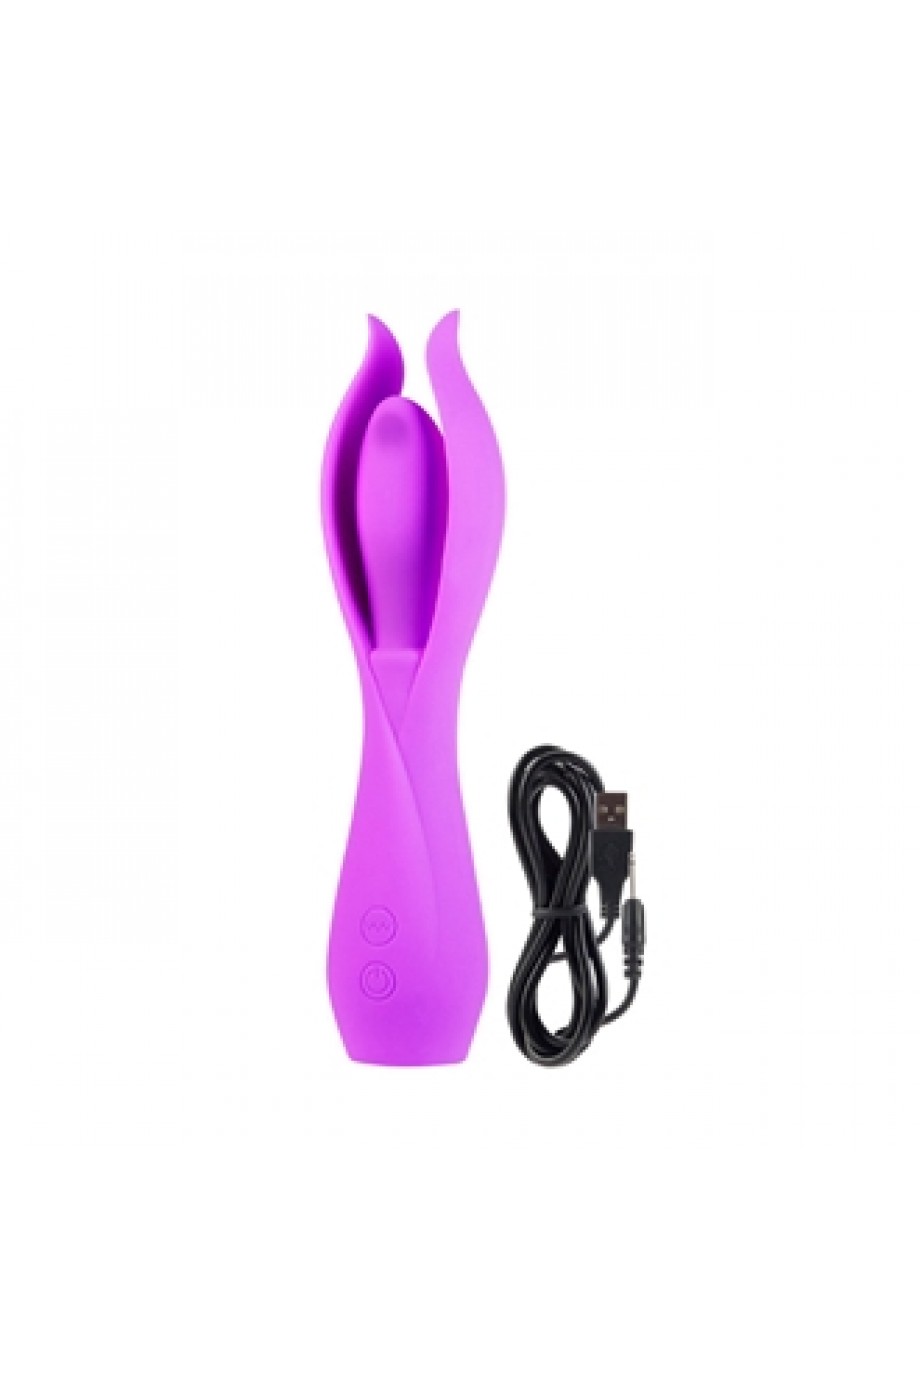 Вибромассажер Lust L6, силикон, 10 режимов вибрации, фиолетовый